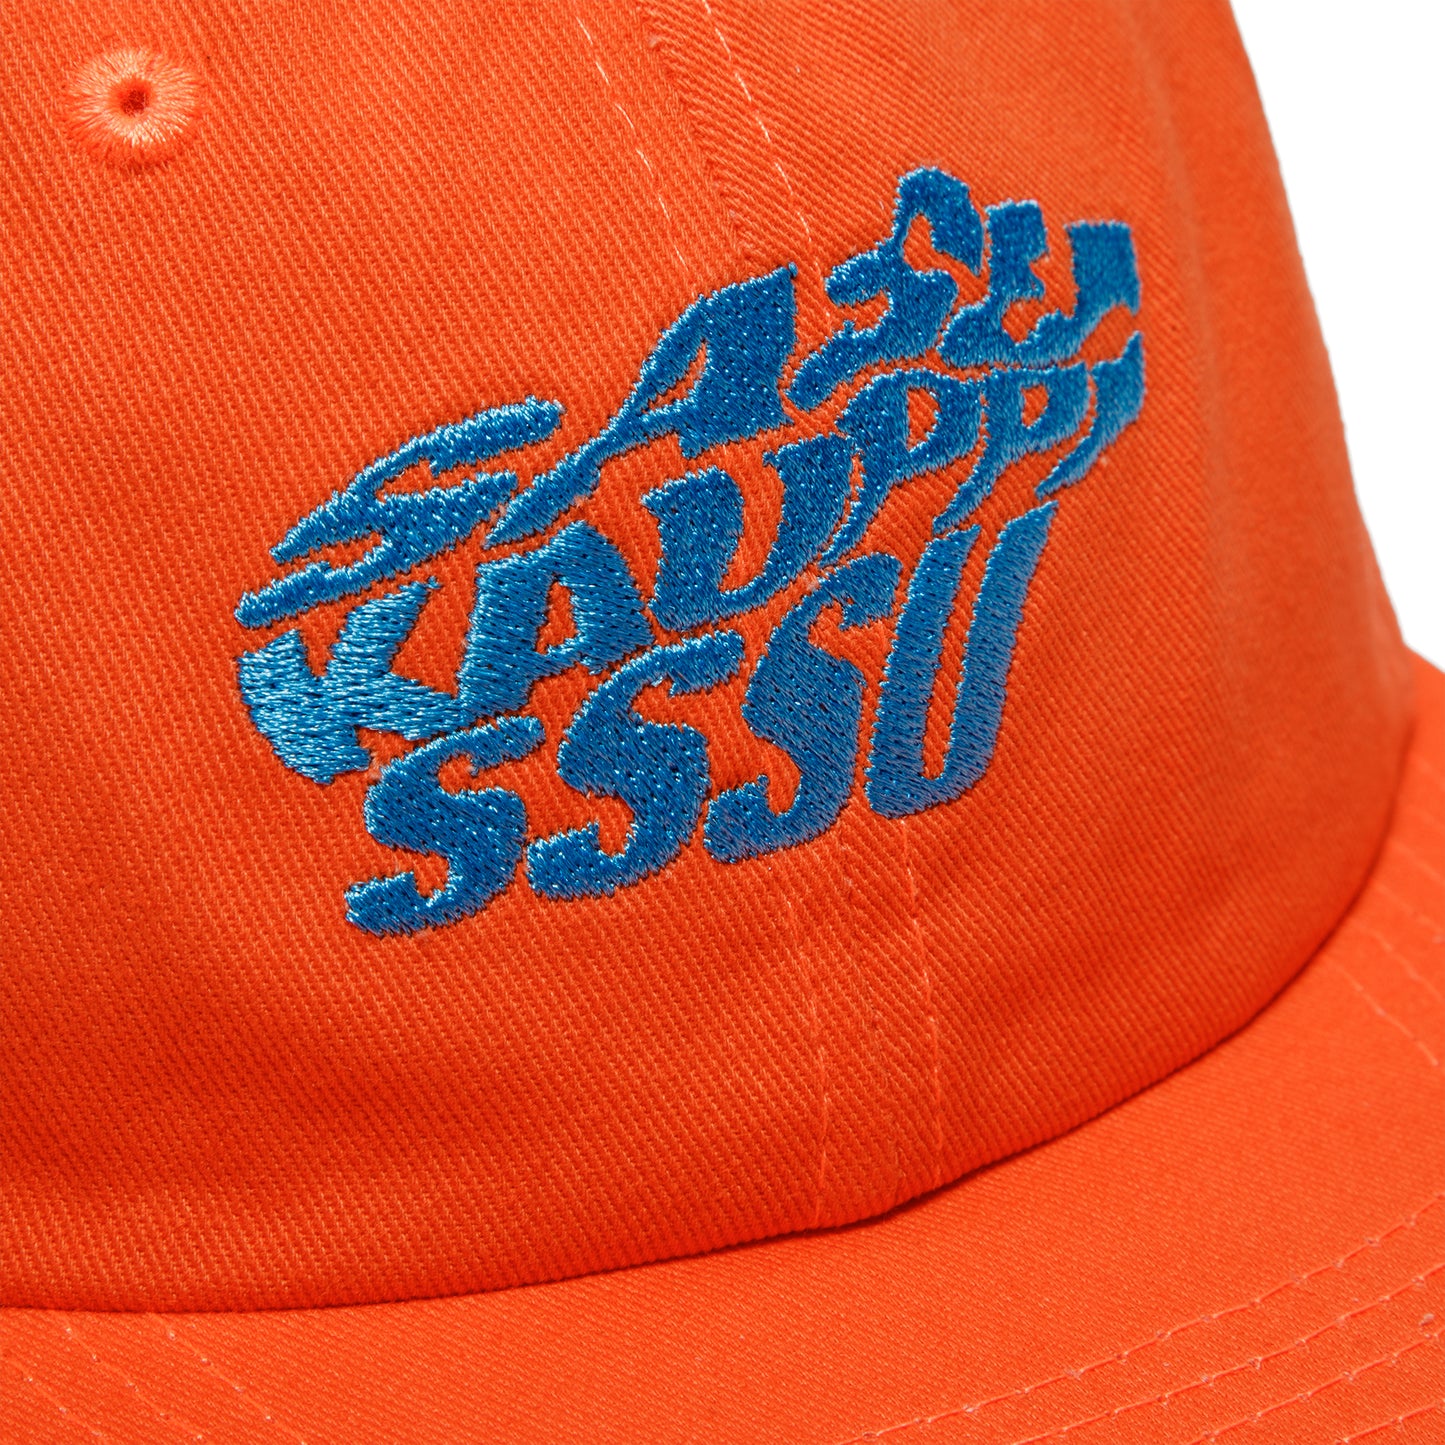 Karhu x Sasu Kauppi Morphing Cap (Orange/Blue)